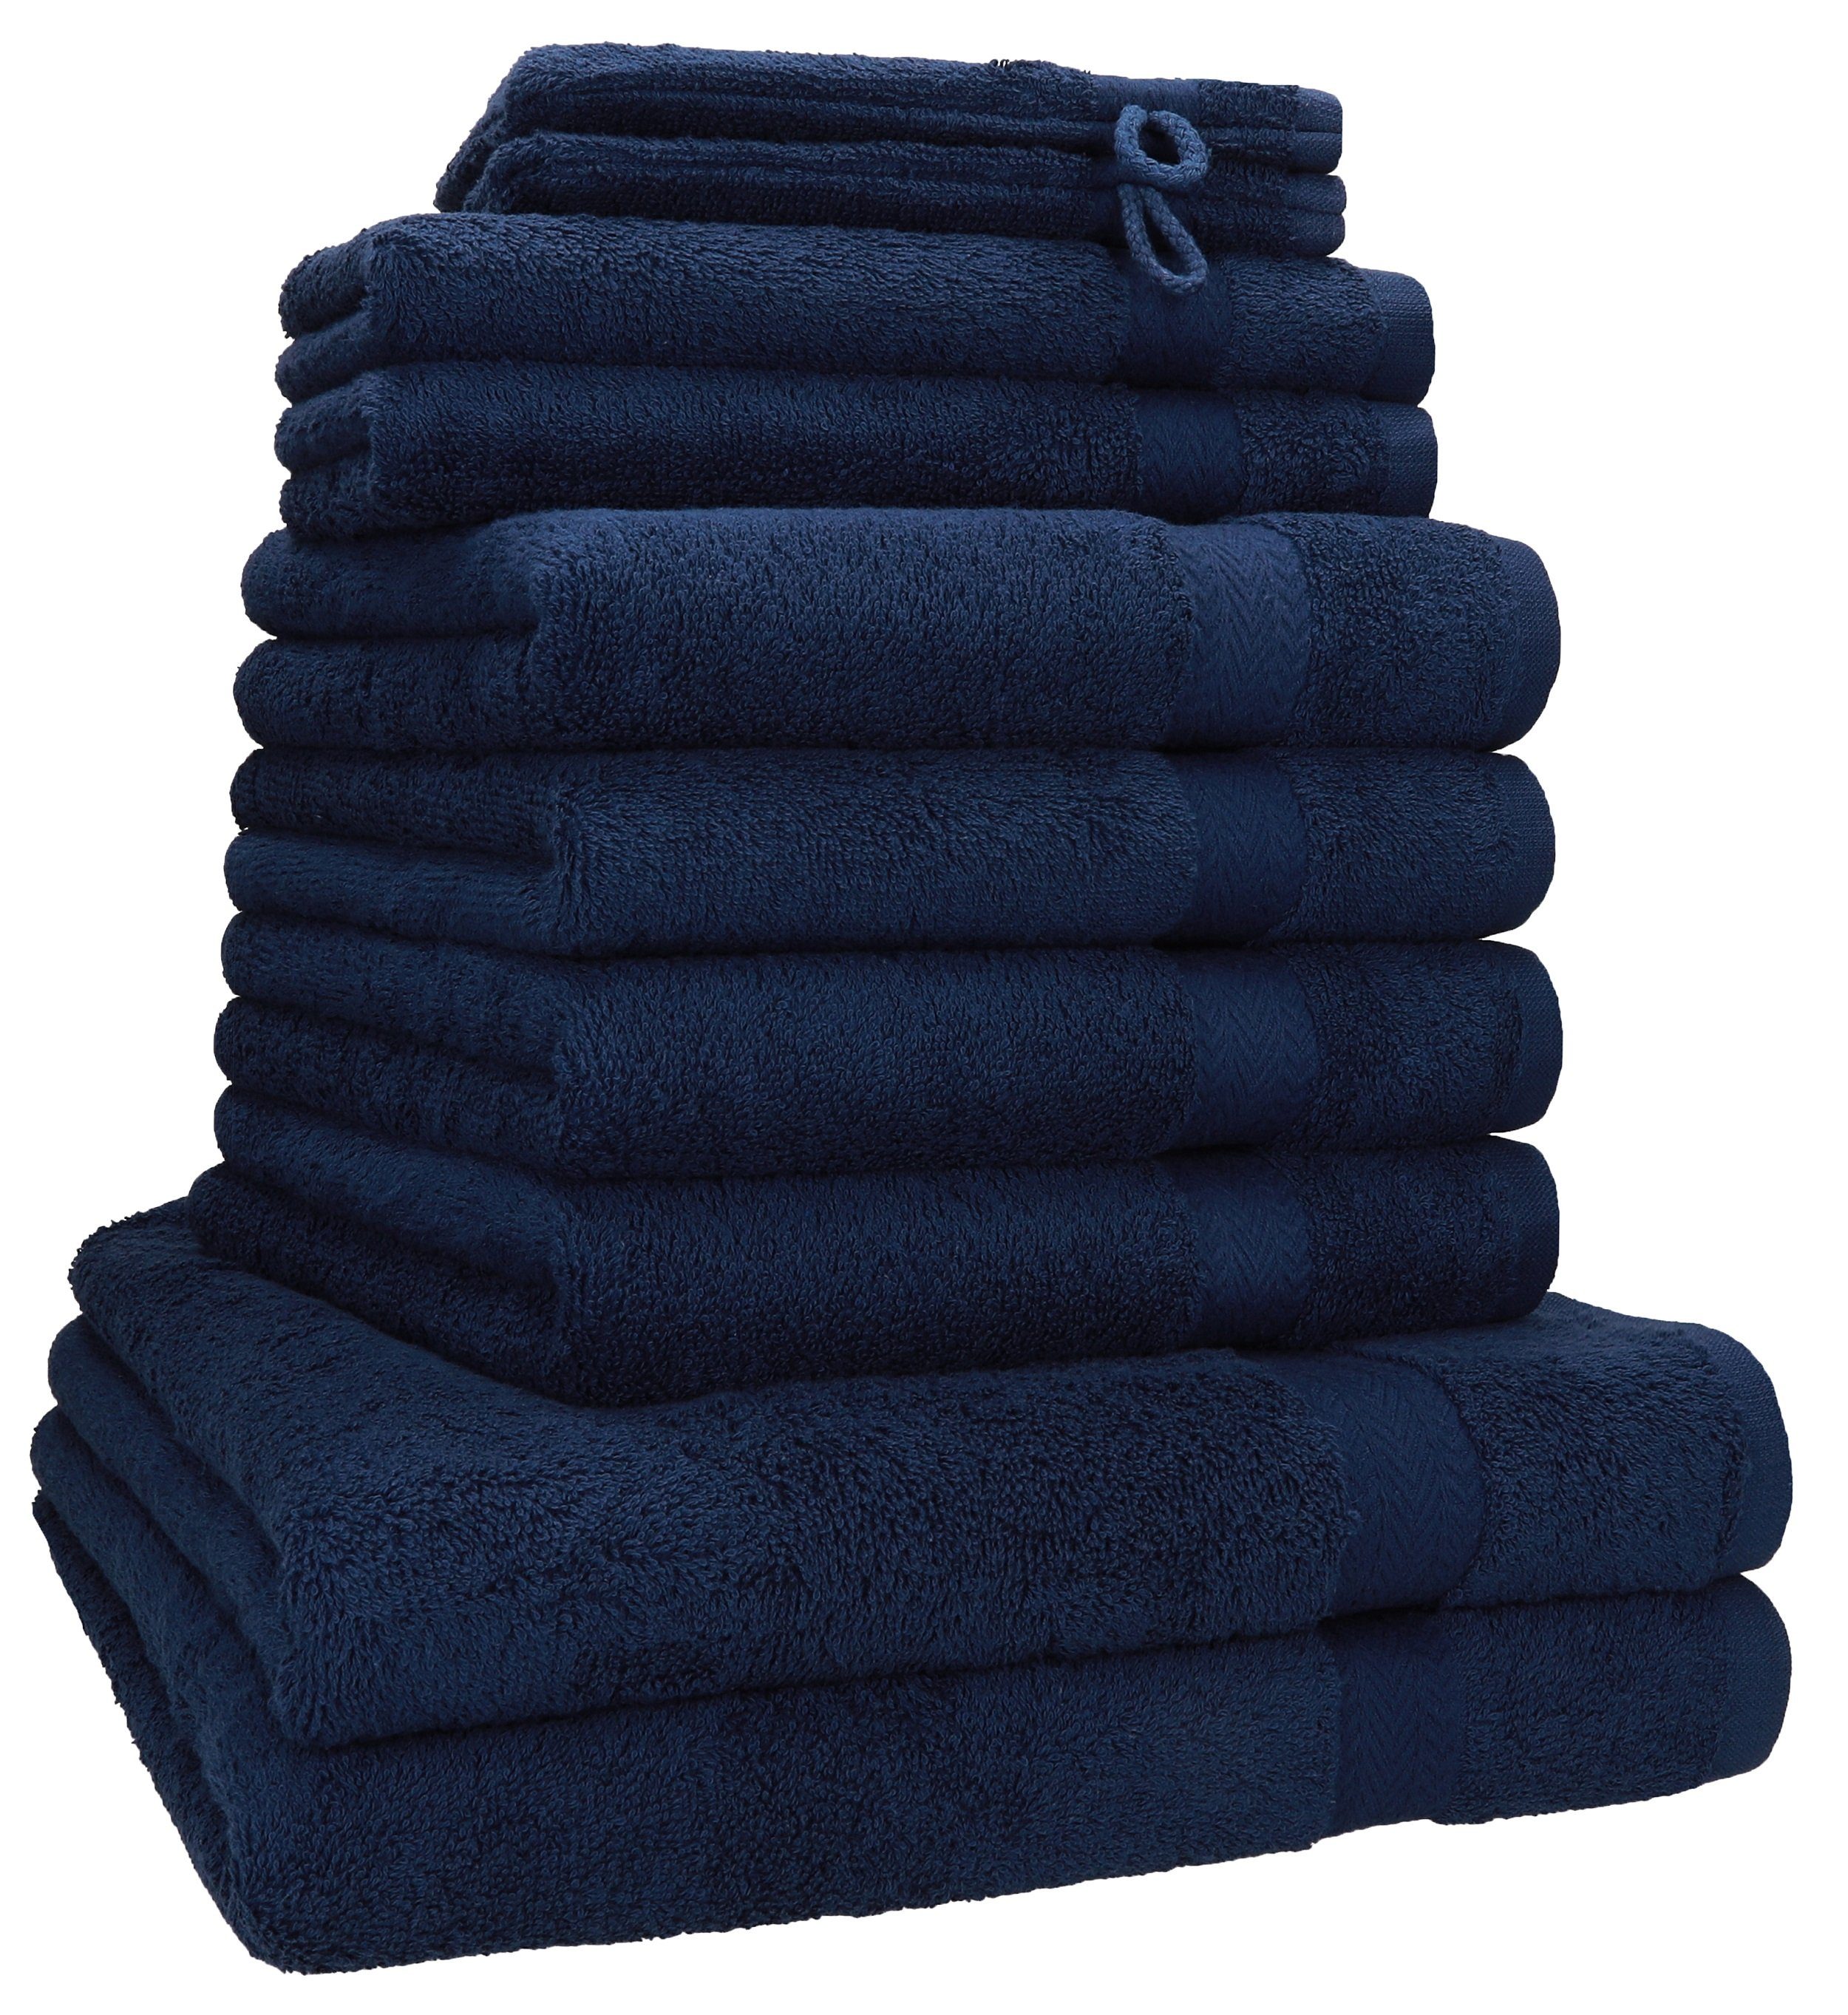 Betz Handtuch Set 10-tlg. PREMIUM dunkelblau 100% (10-tlg) Handtuch-Set Baumwolle, 100% Baumwolle